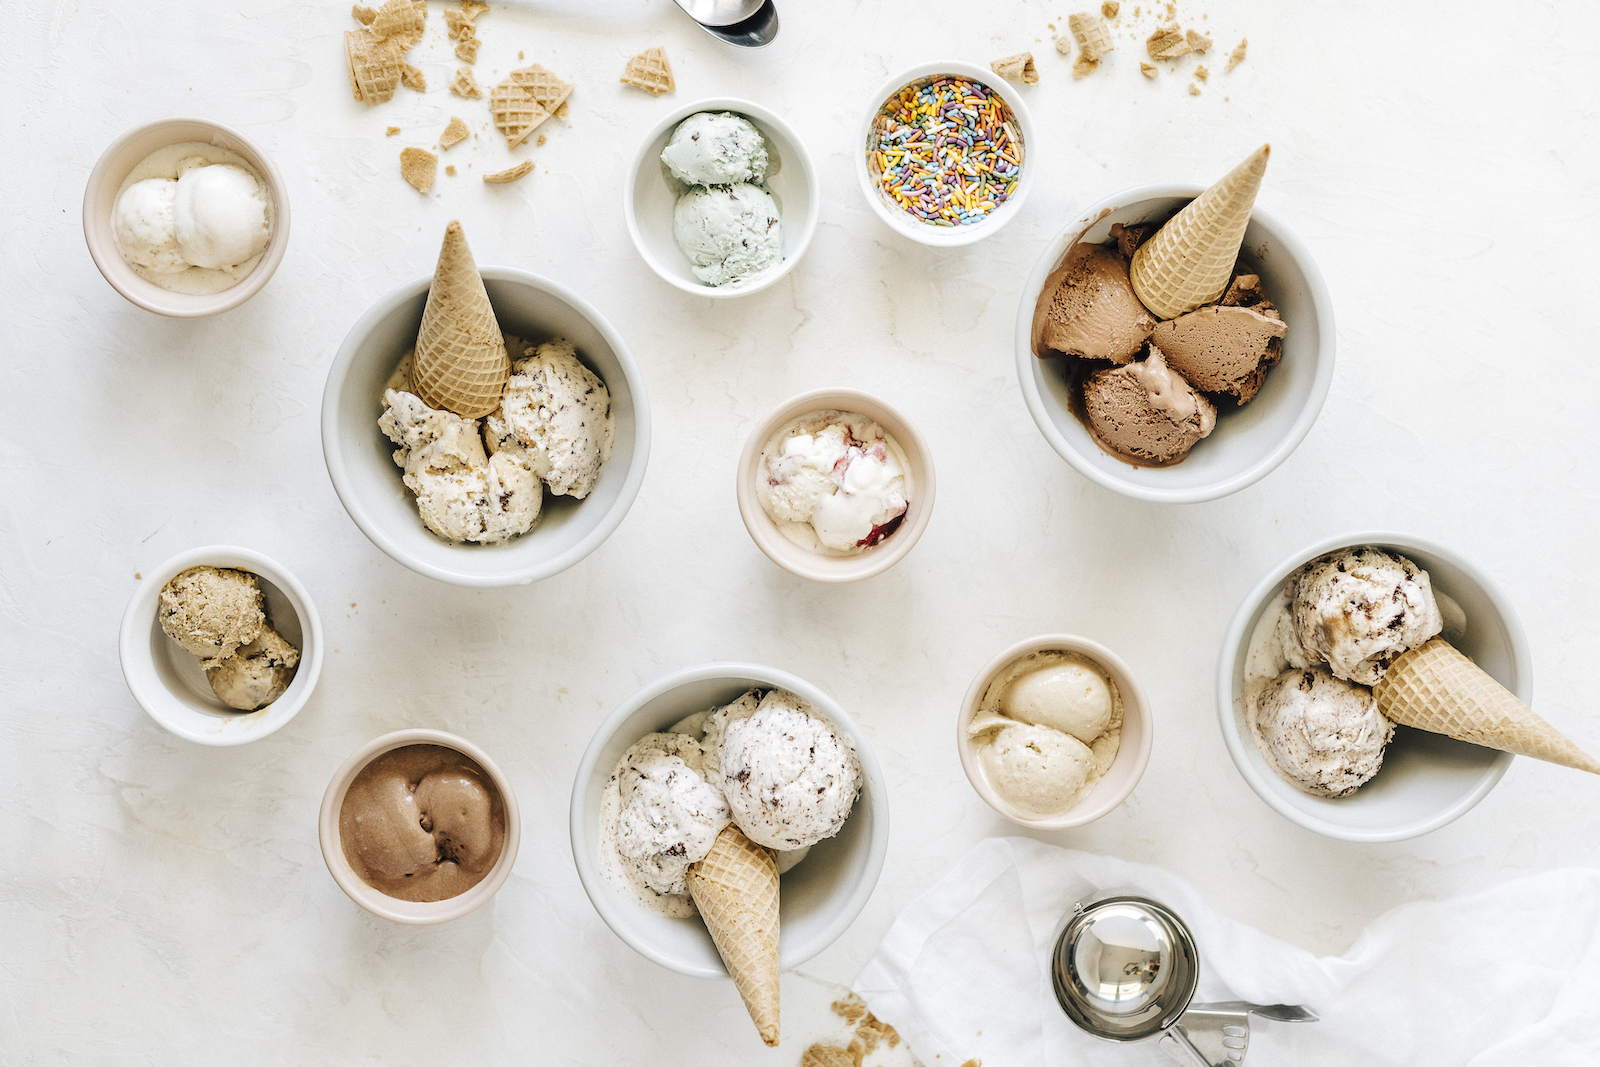 camille-styles-ice-cream-dairy-free-gluten-free-5470